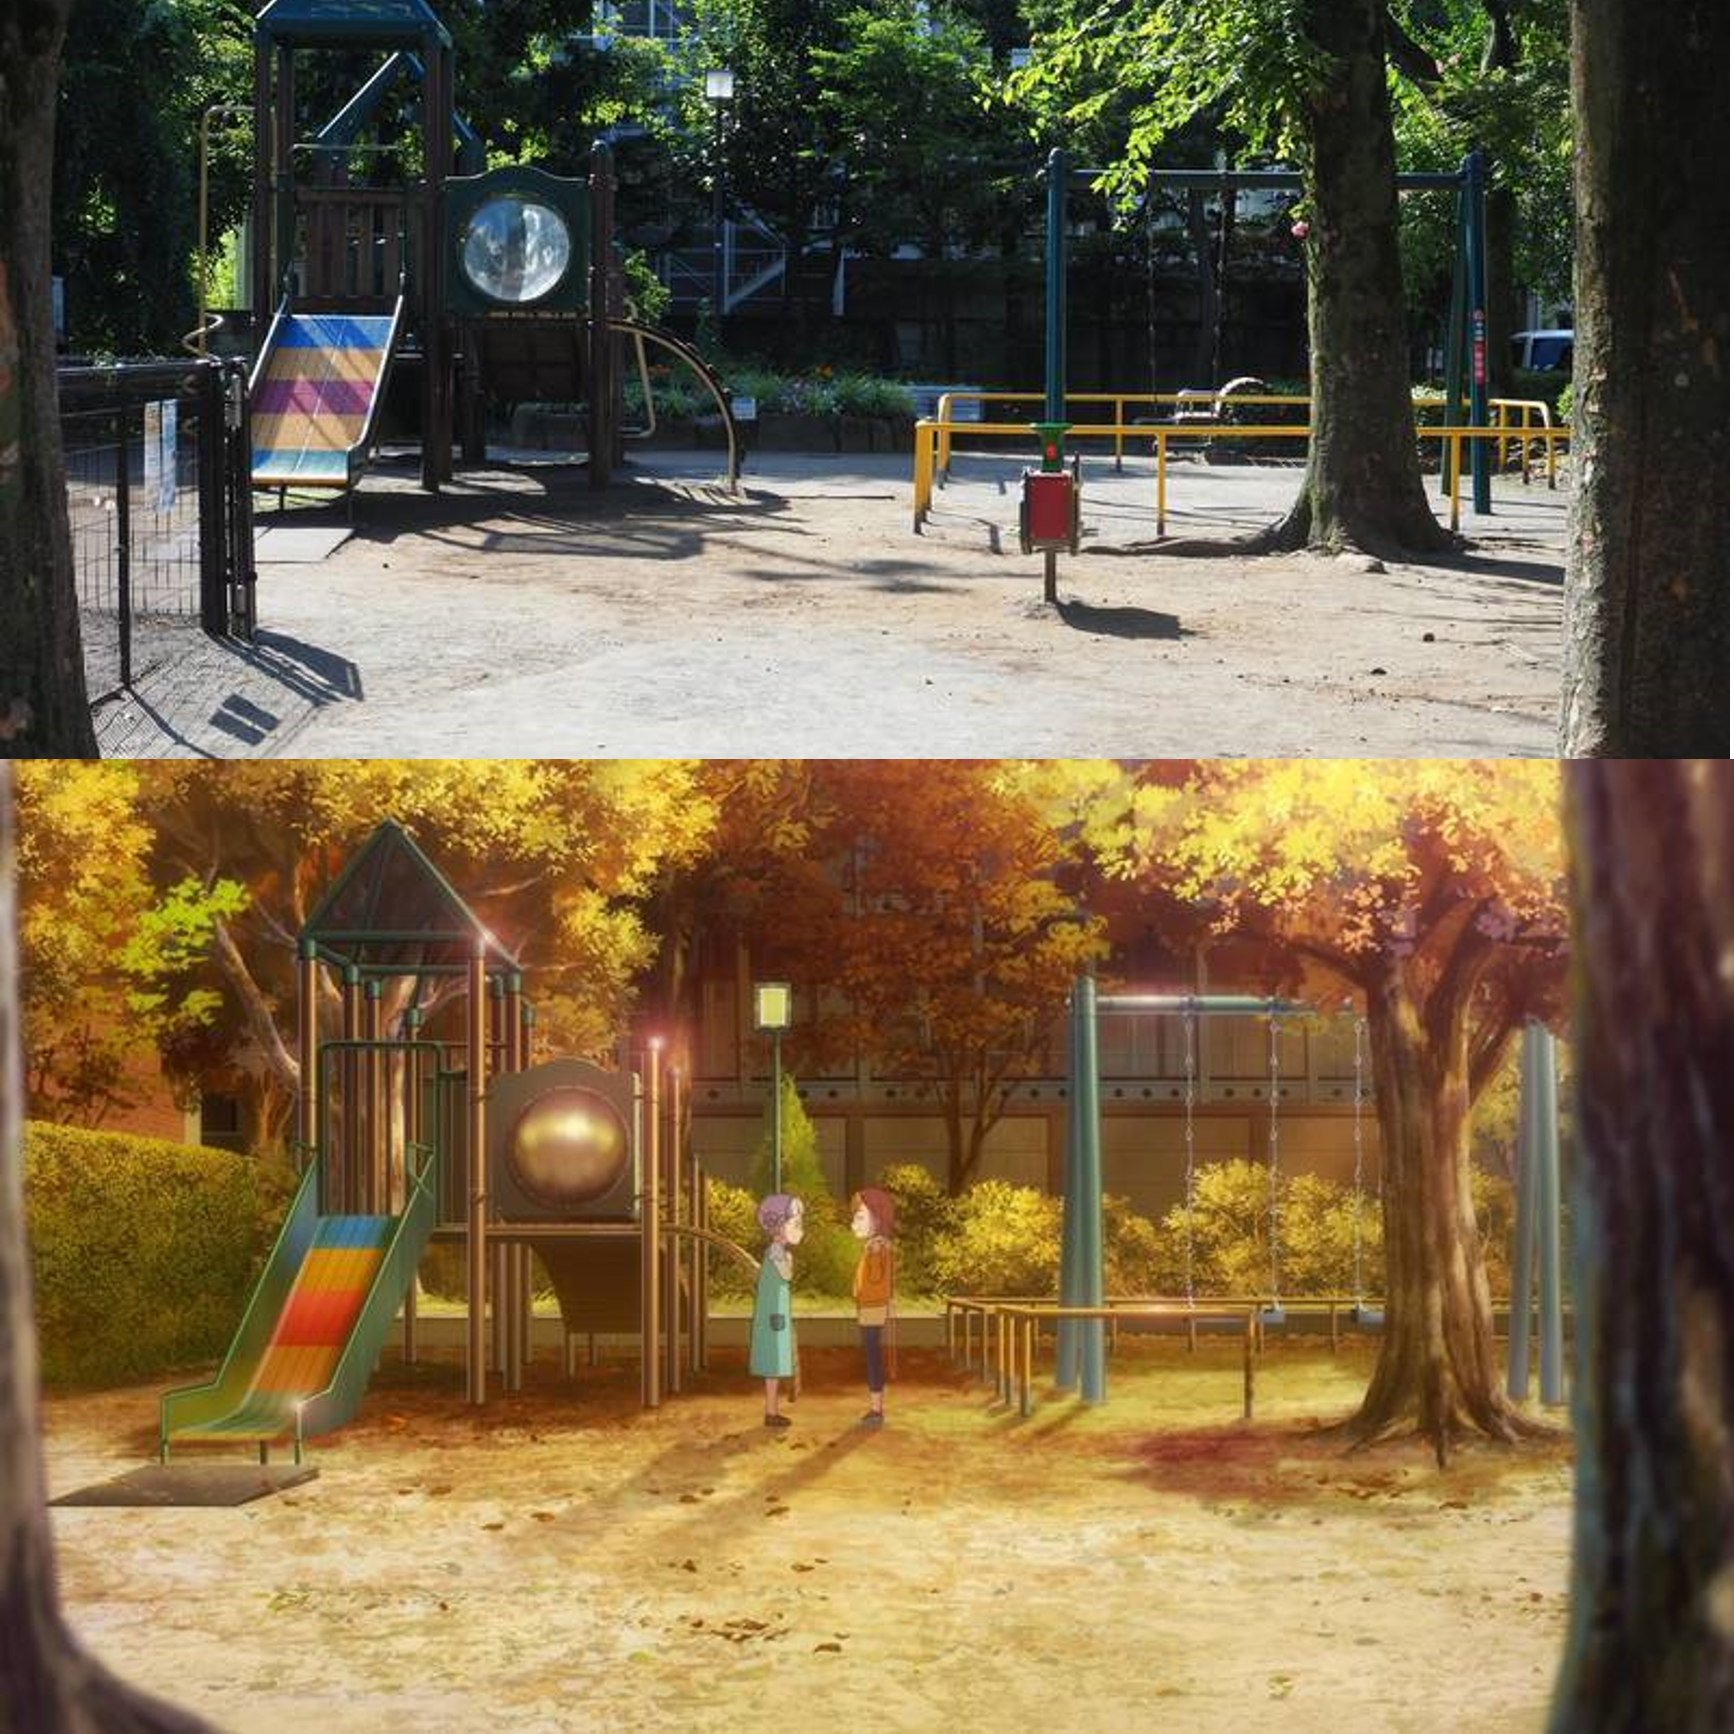 Minami Aoyama 6-chome Children's Park